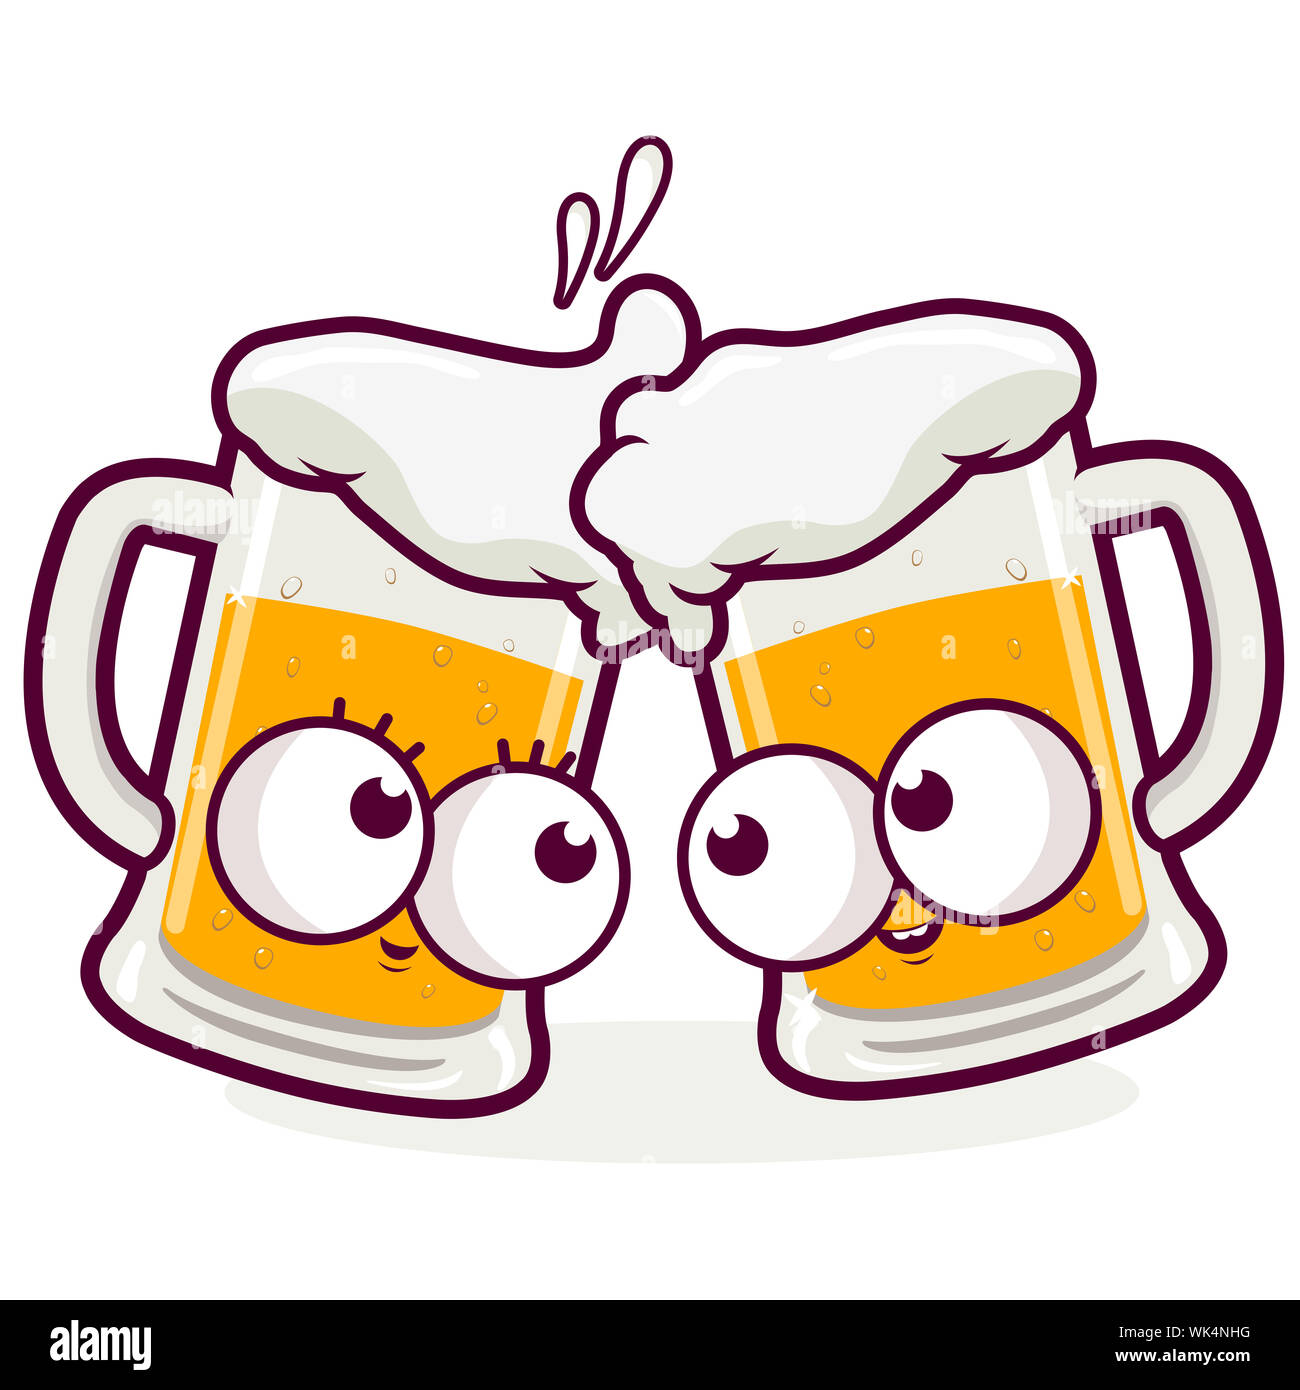 Illustration of two beer mug characters toasting. Stock Photo